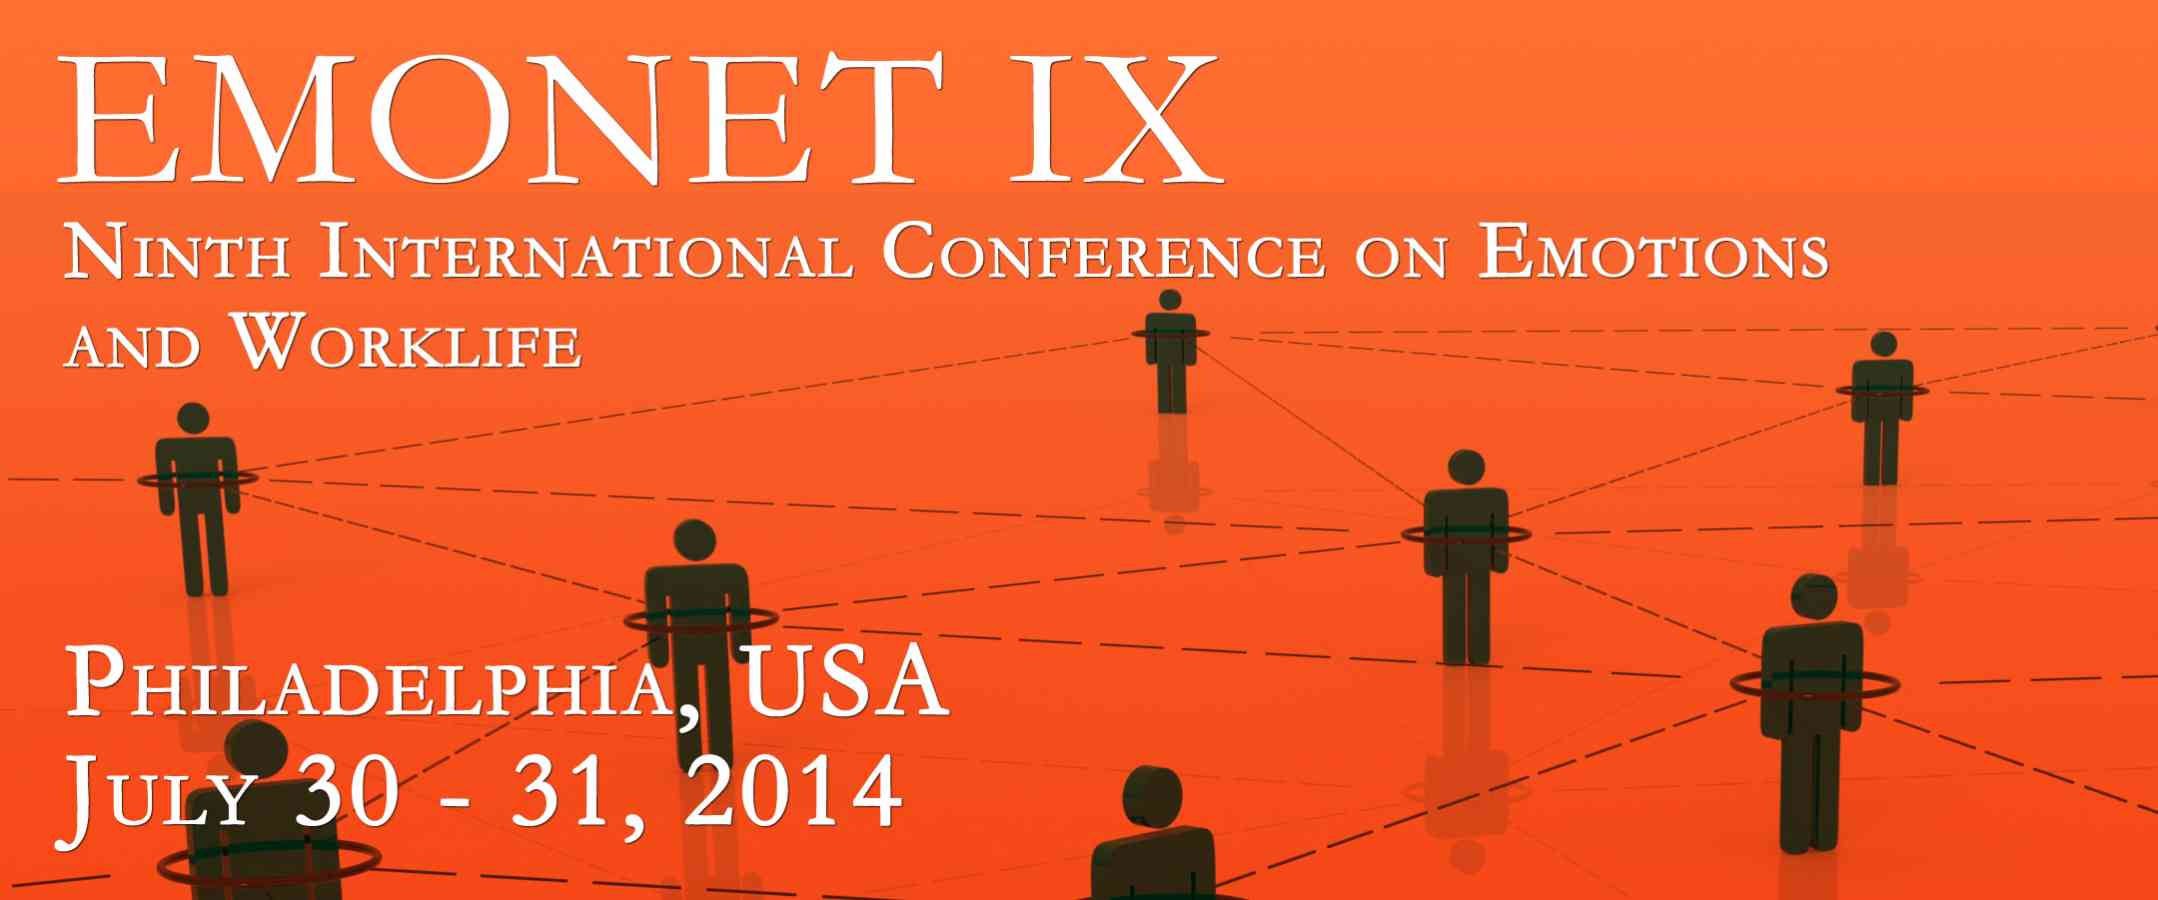 Emonet IX - International Conference on Emotions and worklife